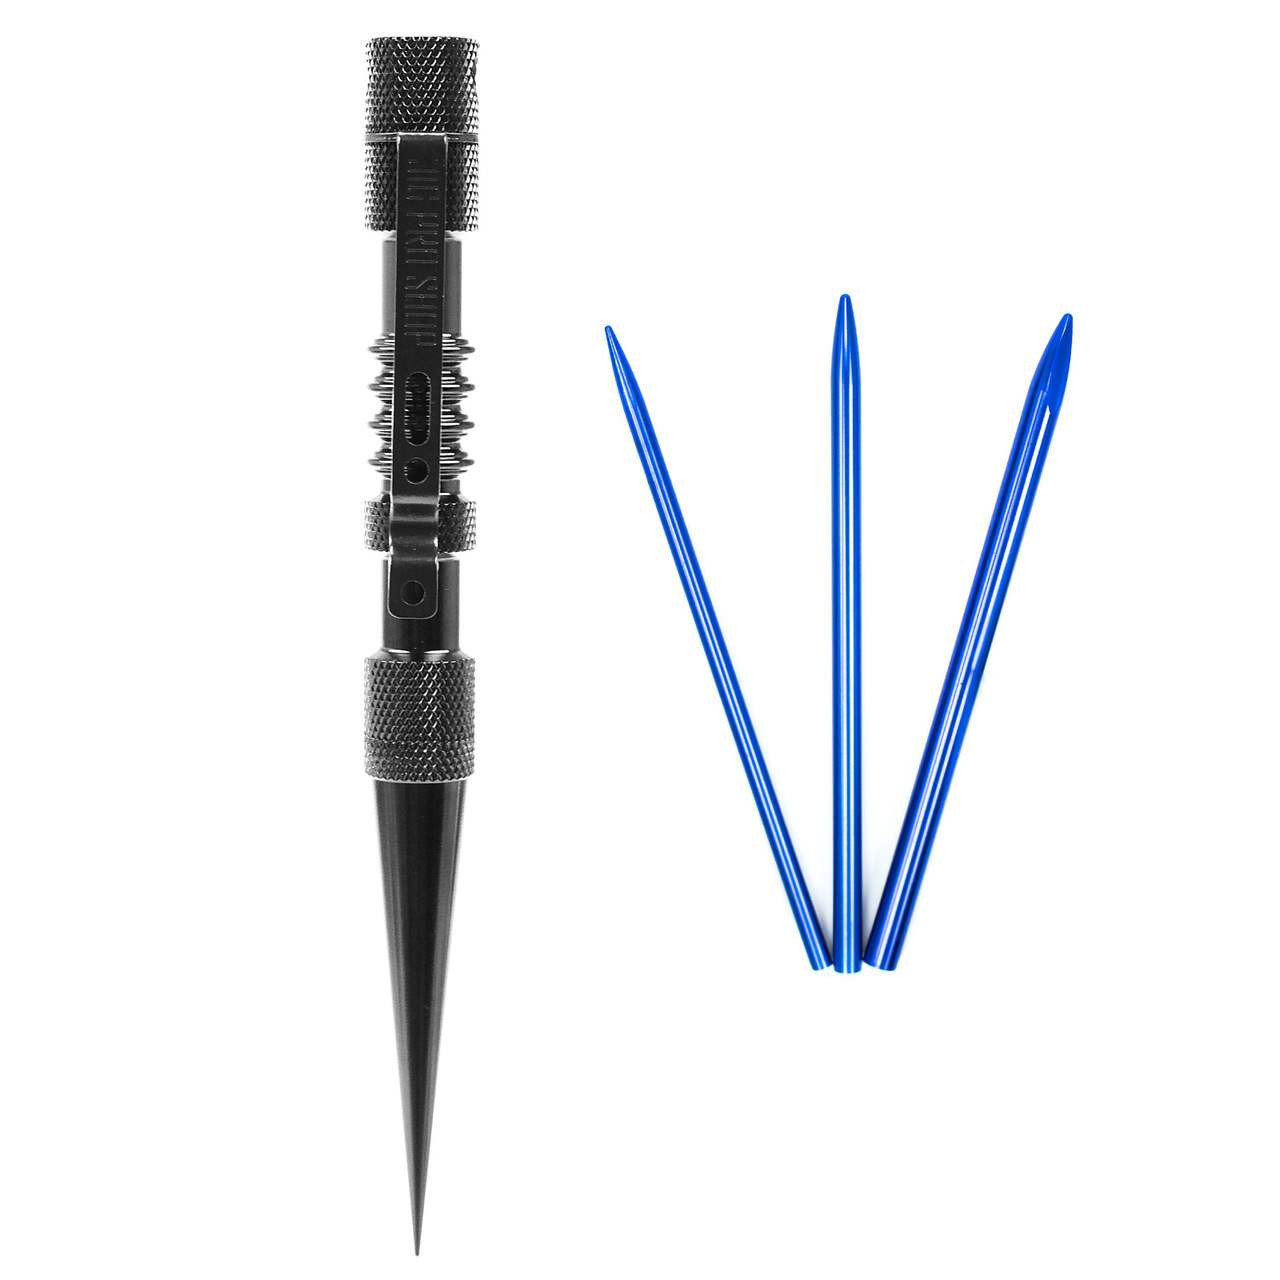 Knotter's Tool - Black w/ Blue Needles